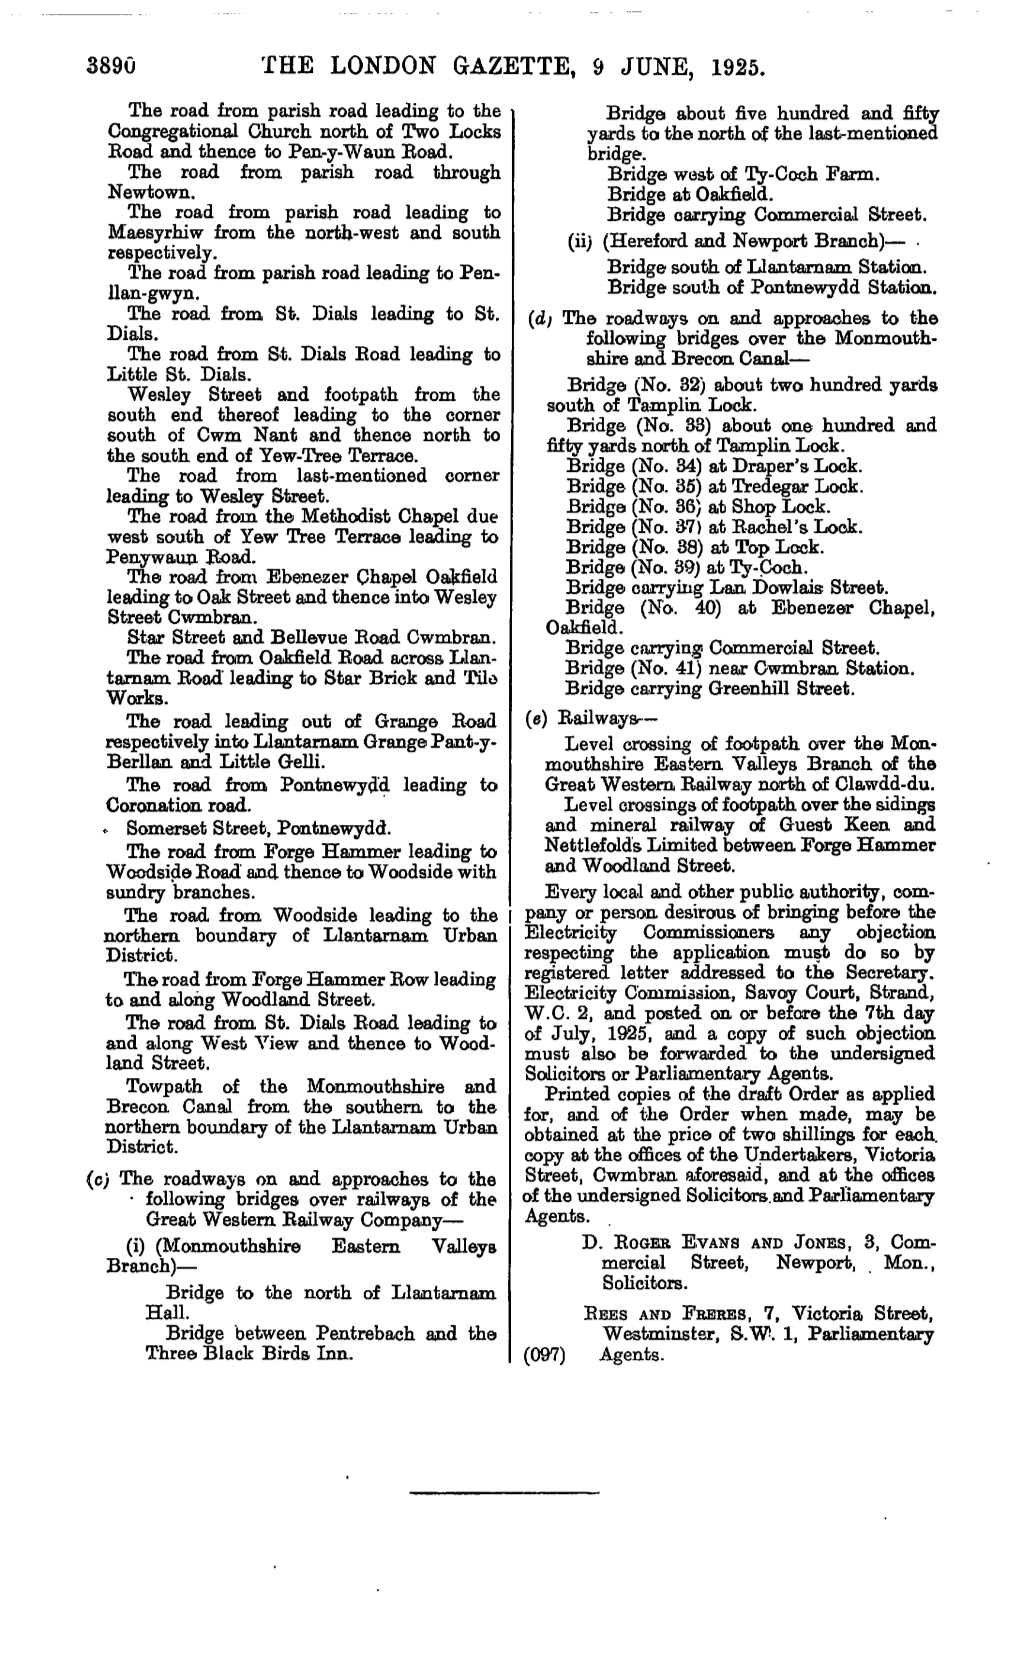 3890 the London Gazette, 9 June, 1925